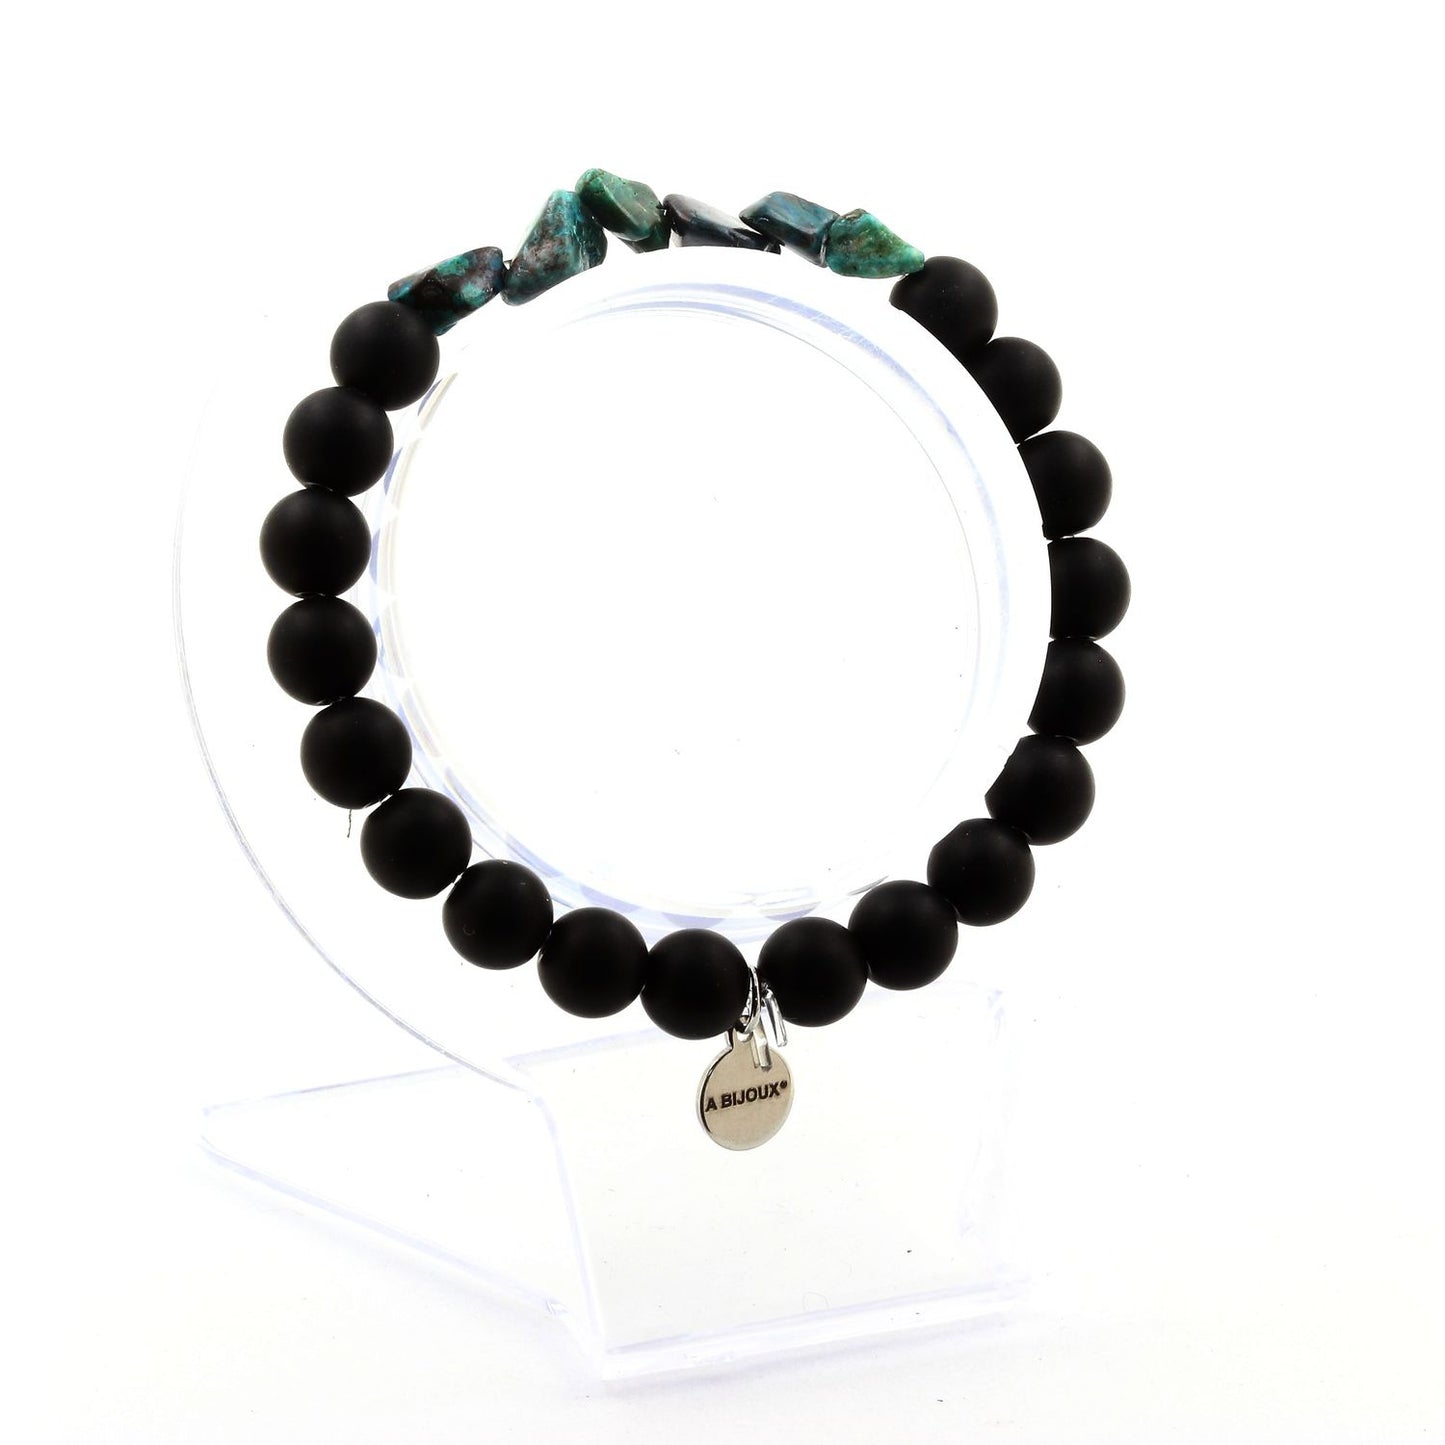 Chrysocolle des USA + Perles Onyx noir mat. Bracelet en Perles naturelles